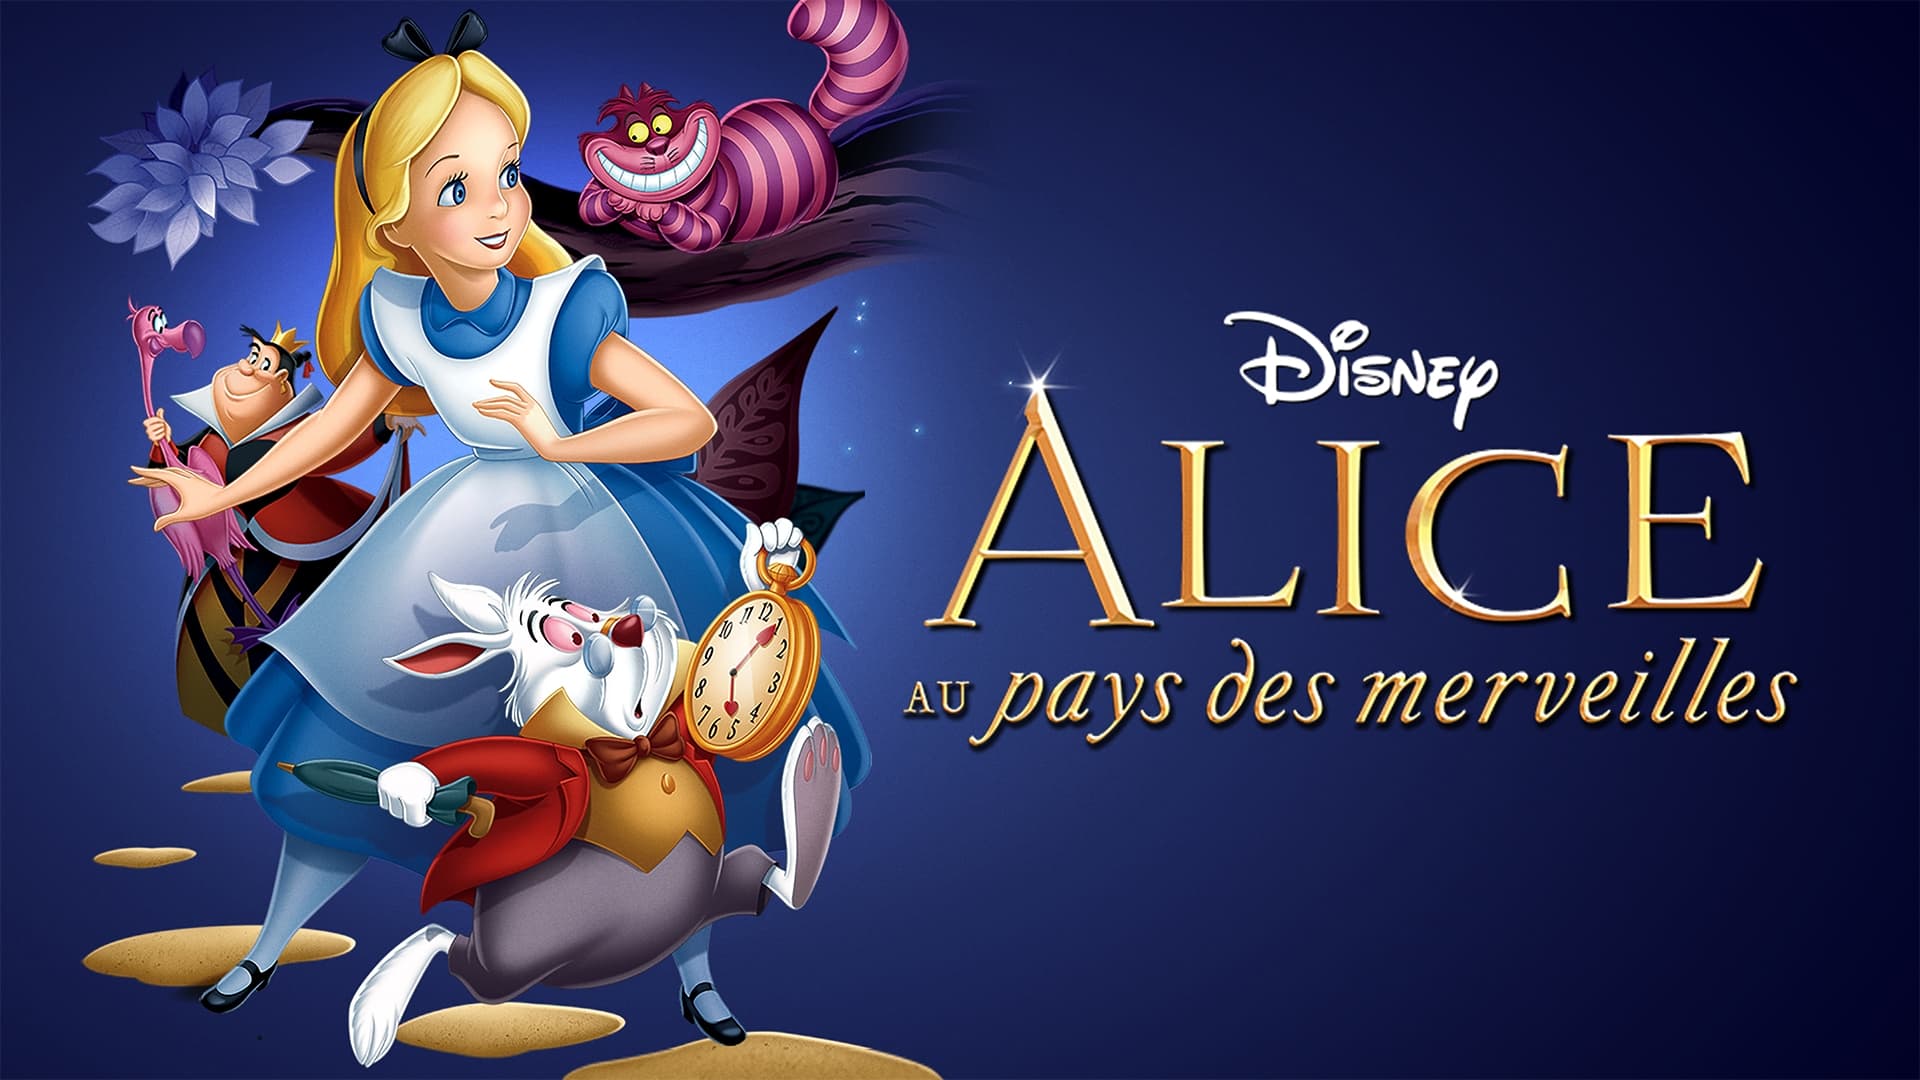 Image du film Alice au pays des merveilles 19jsug9it1syy6xrqcnkjvid4o2jpg